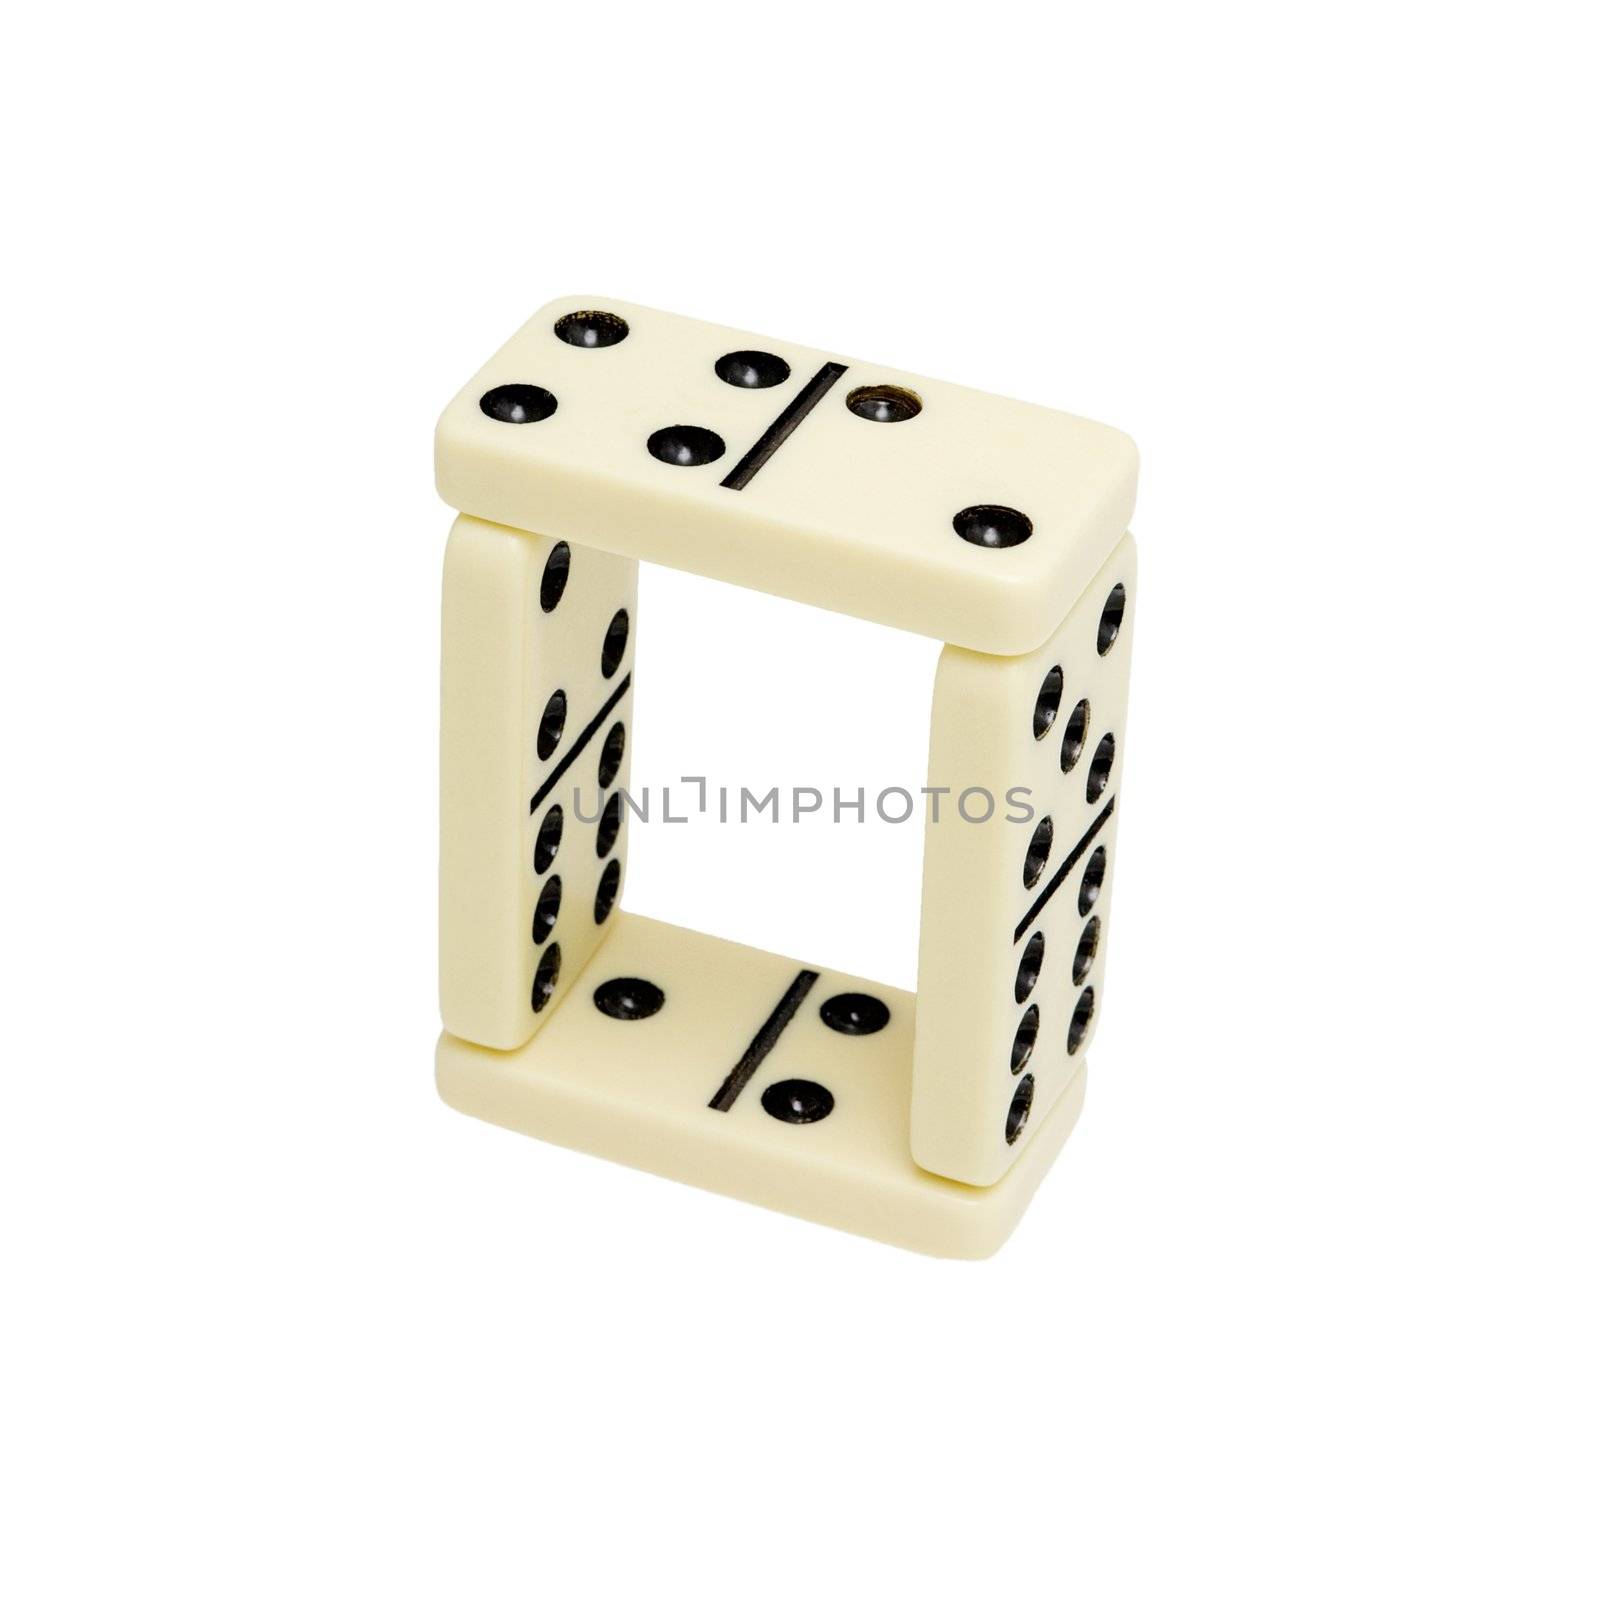 dominoe by pzaxe